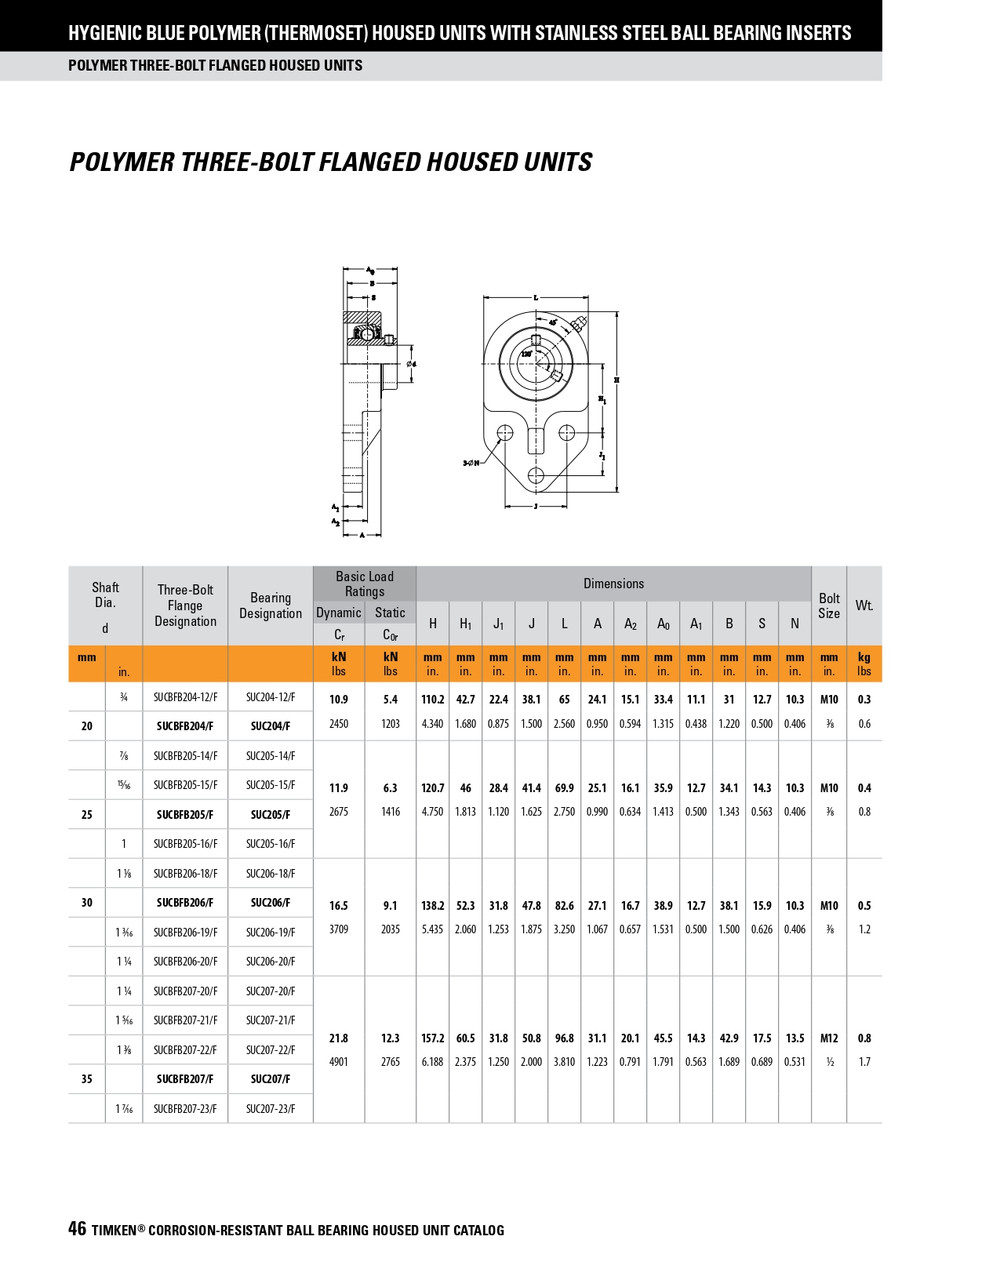 1-15/16" Hygienic Polymer Set Screw Three-Bolt Flange Block Assembly   SUCBFB210-31/F